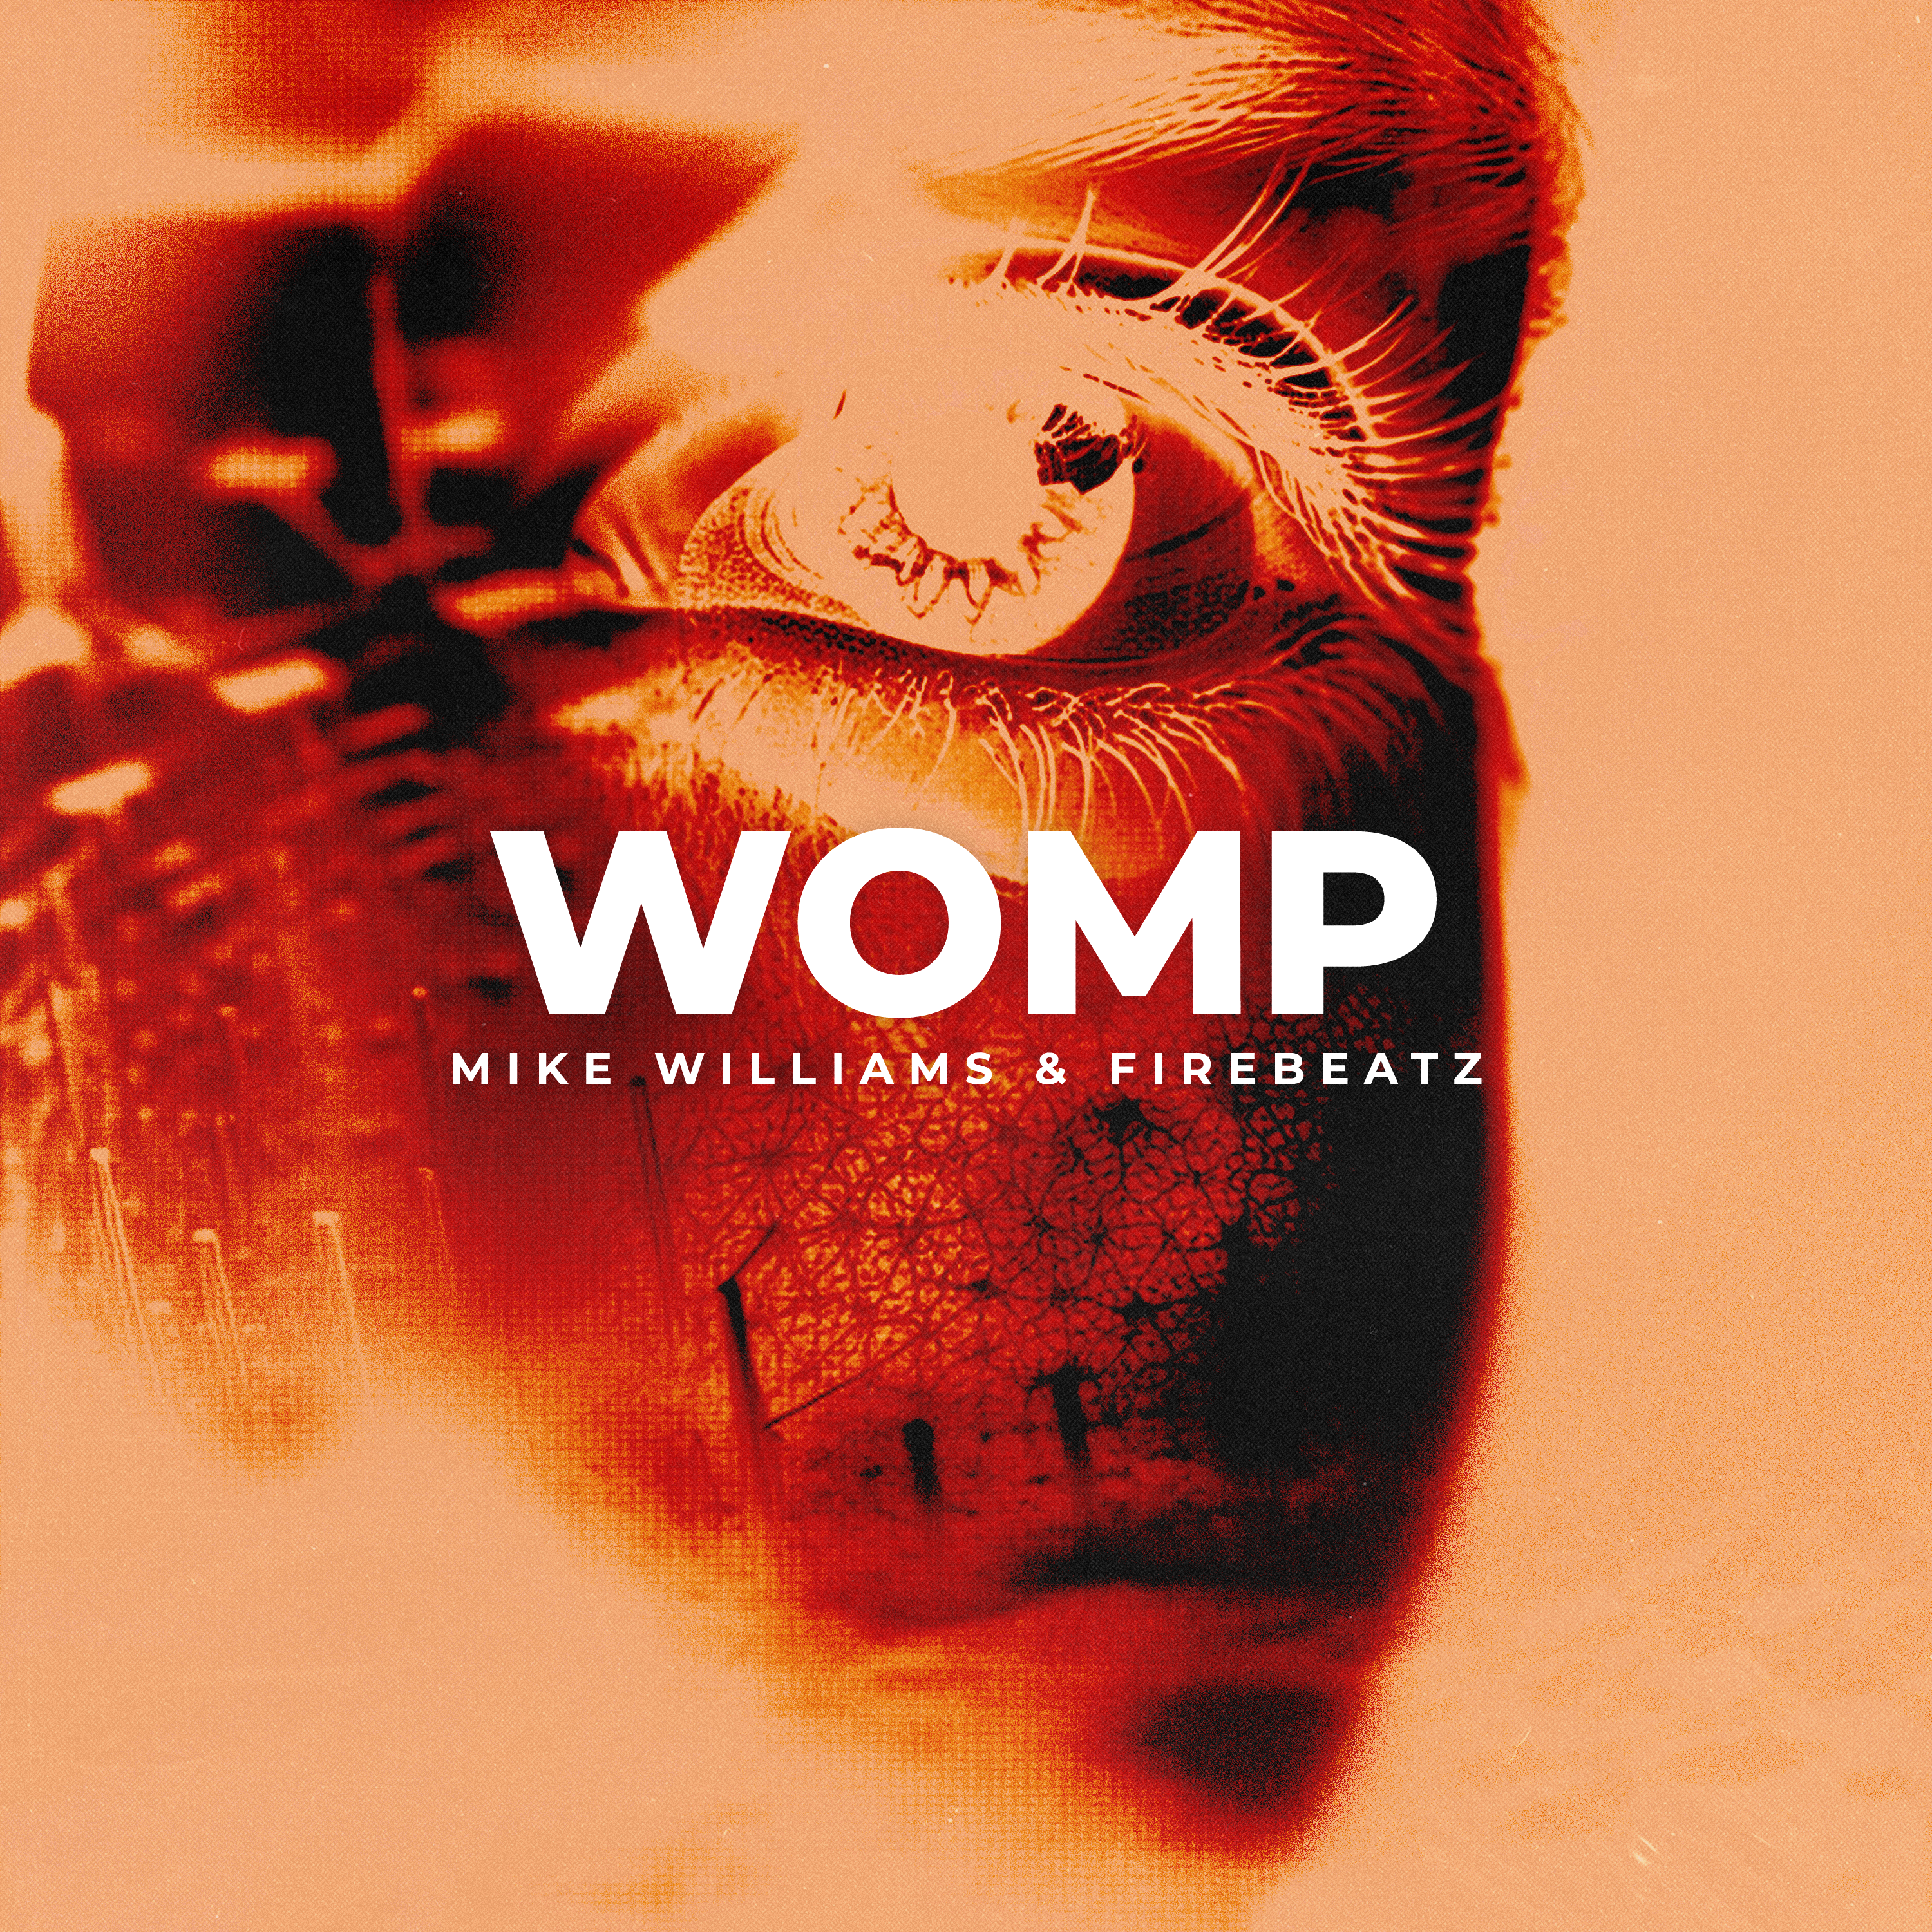 Artwork release Mike Williams & Firebeatz - Womp